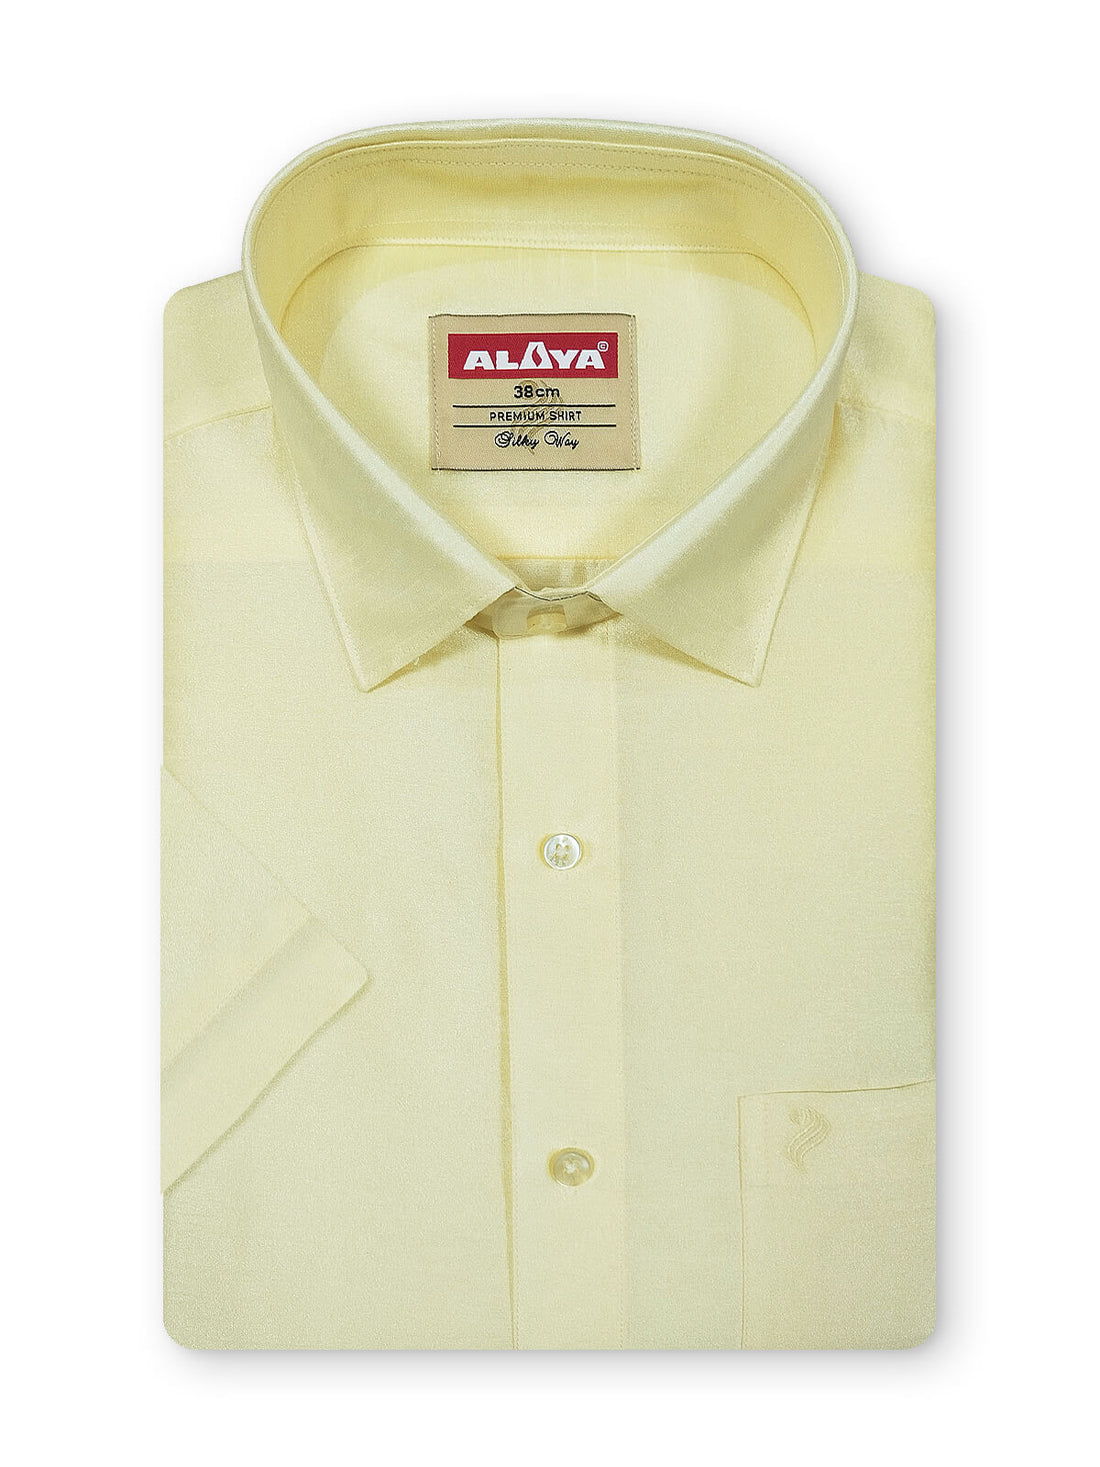 Silky Way Shirt for Men - Regular Fit - Cream